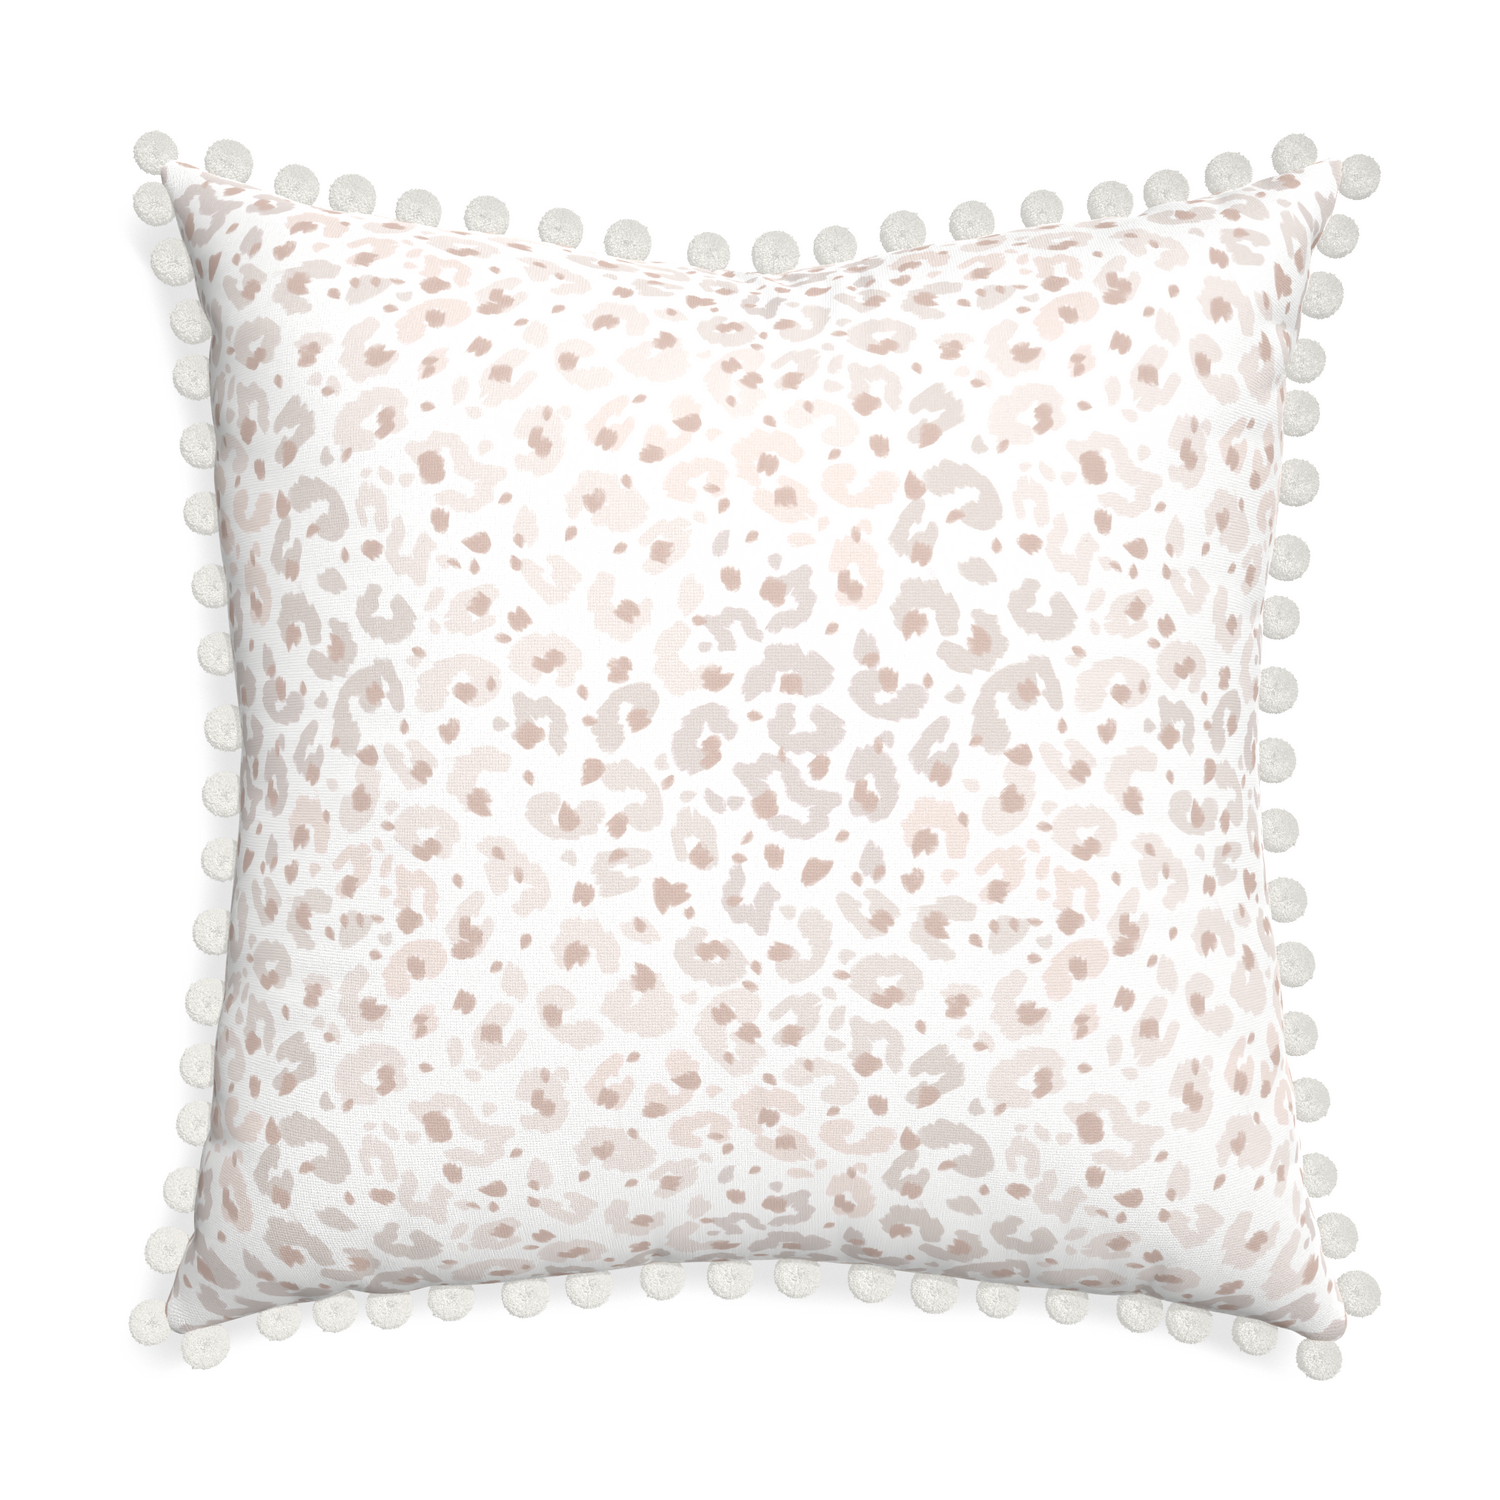 Euro-sham rosie custom pillow with snow pom pom on white background